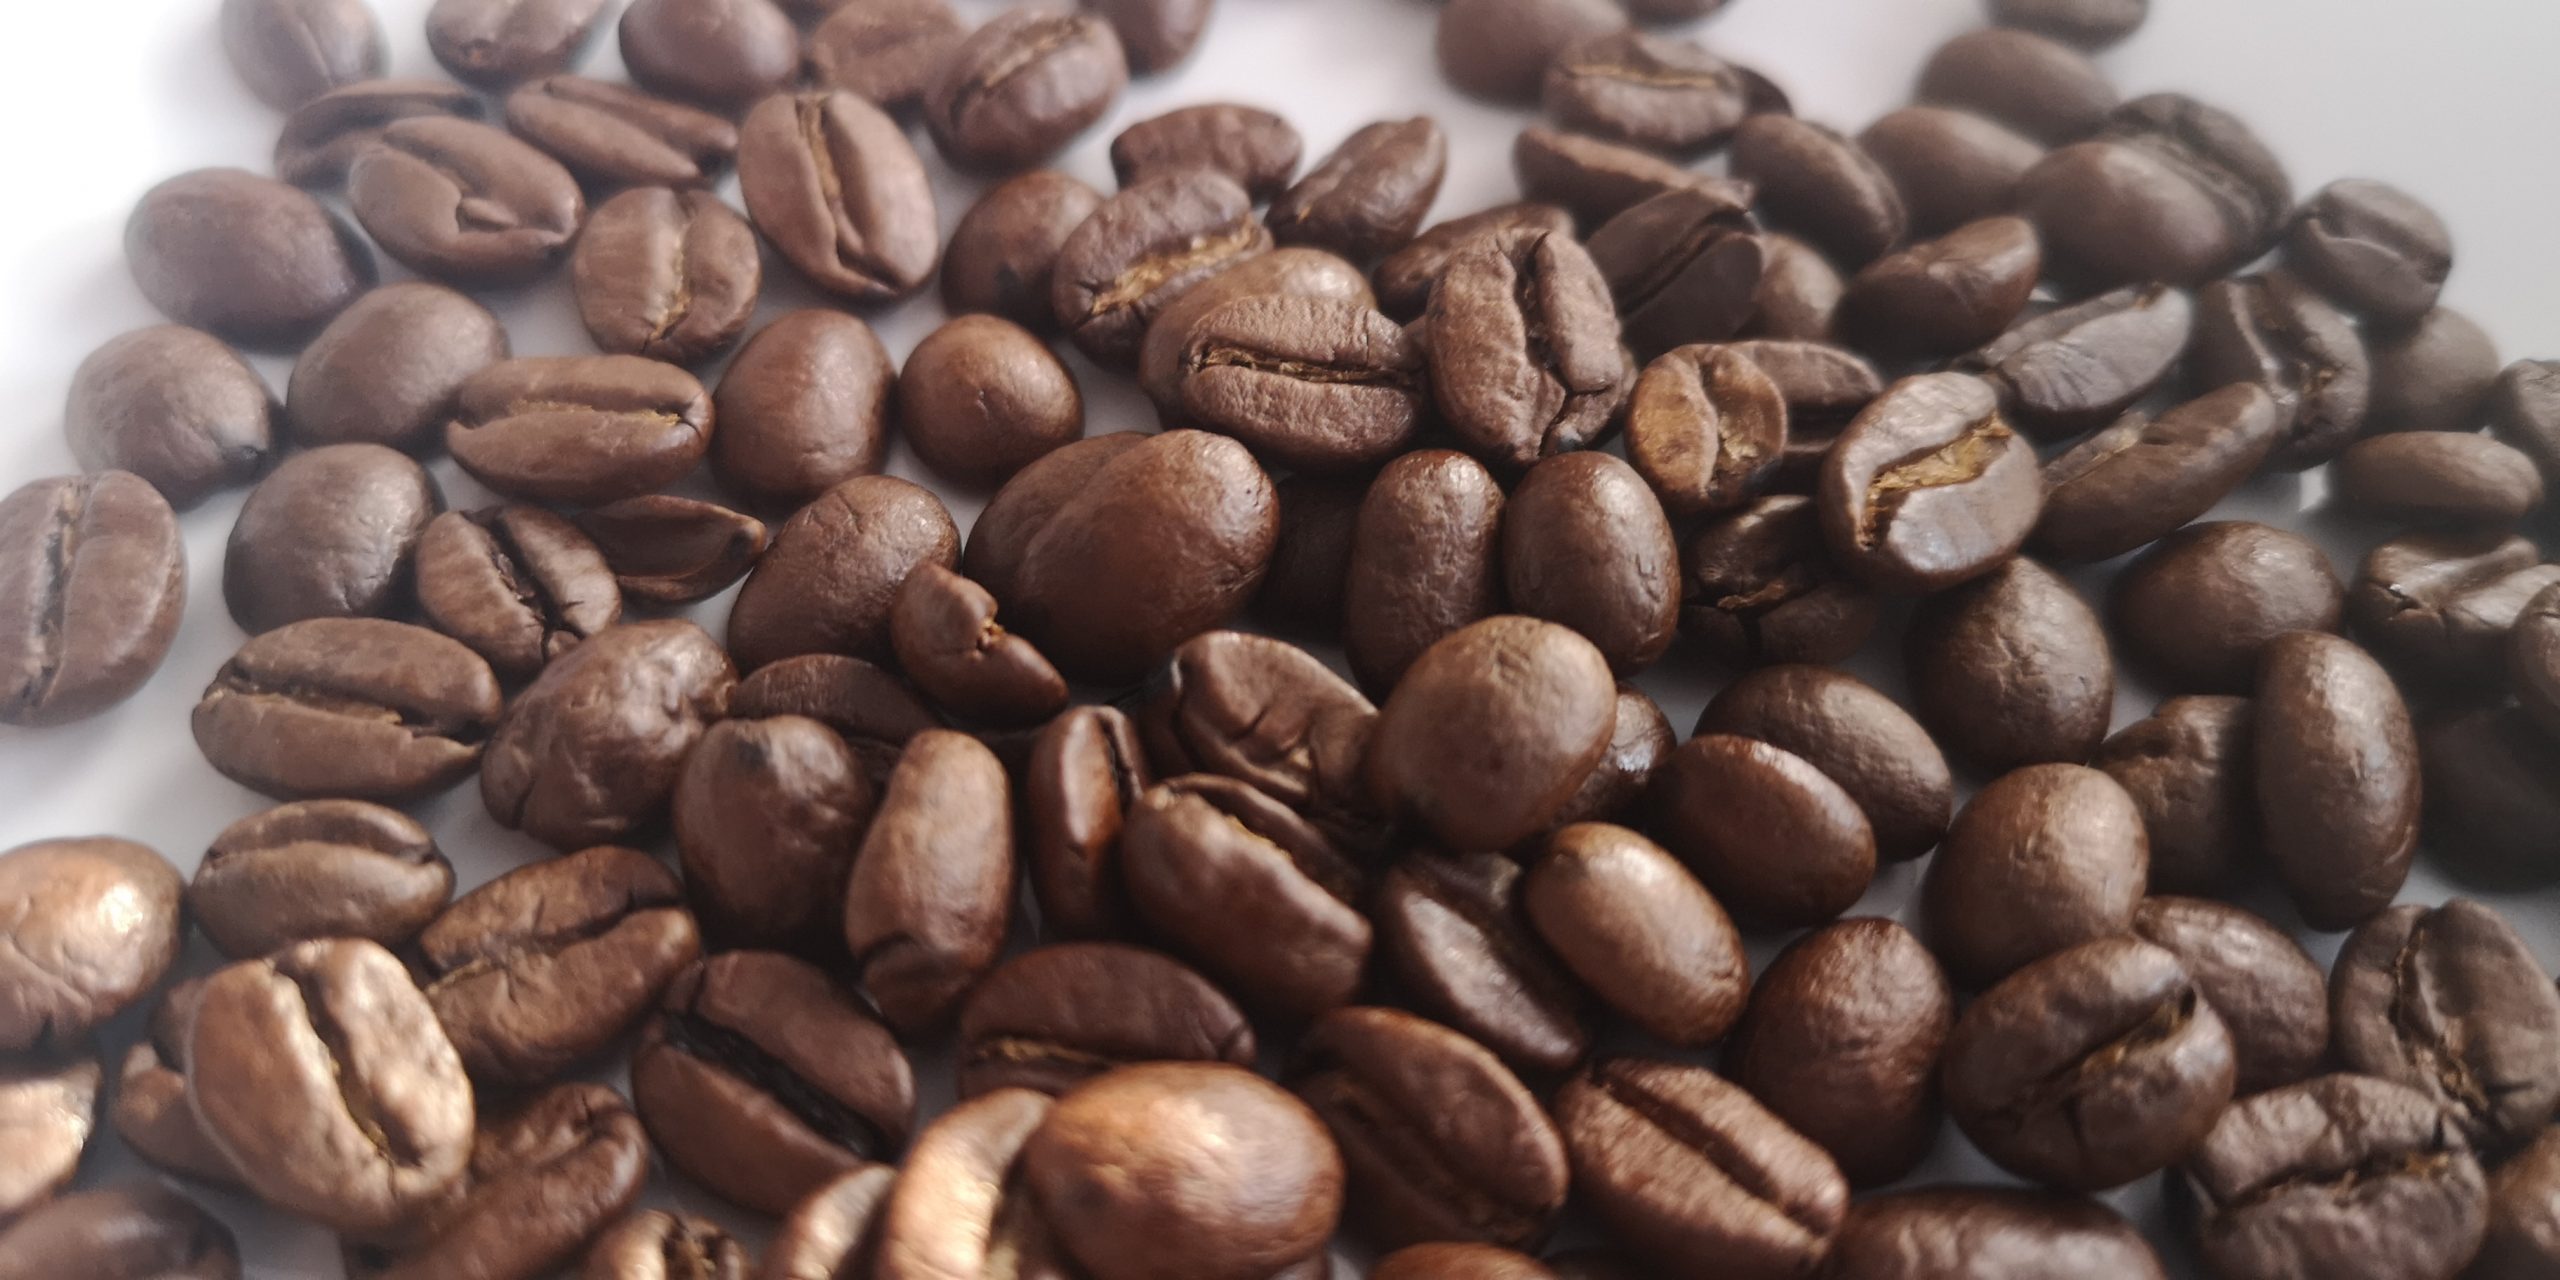 Ethiopia, the legendary home of coffee